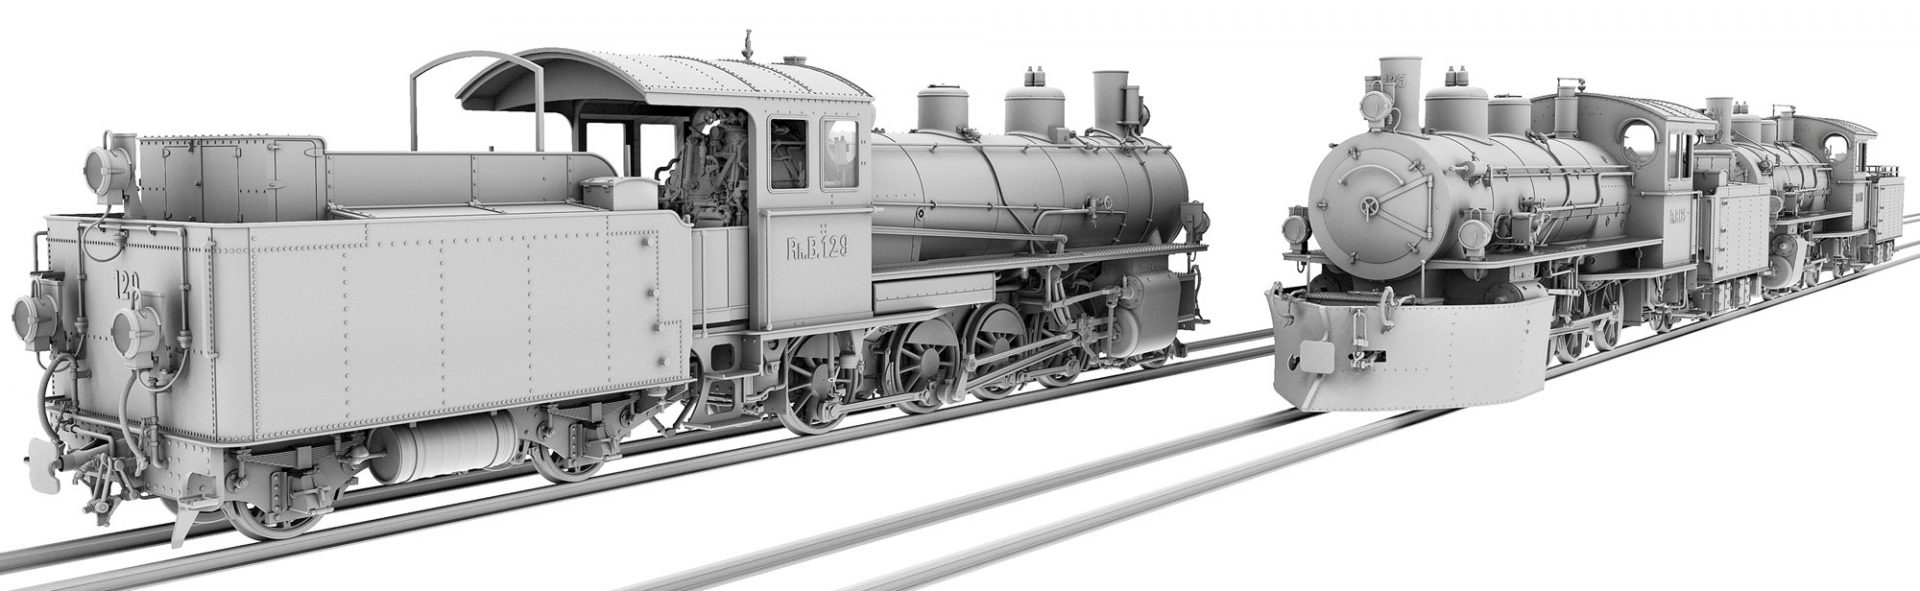 0m RhB Dampflokomotiven G 45 101-129_ABG Technology_2021